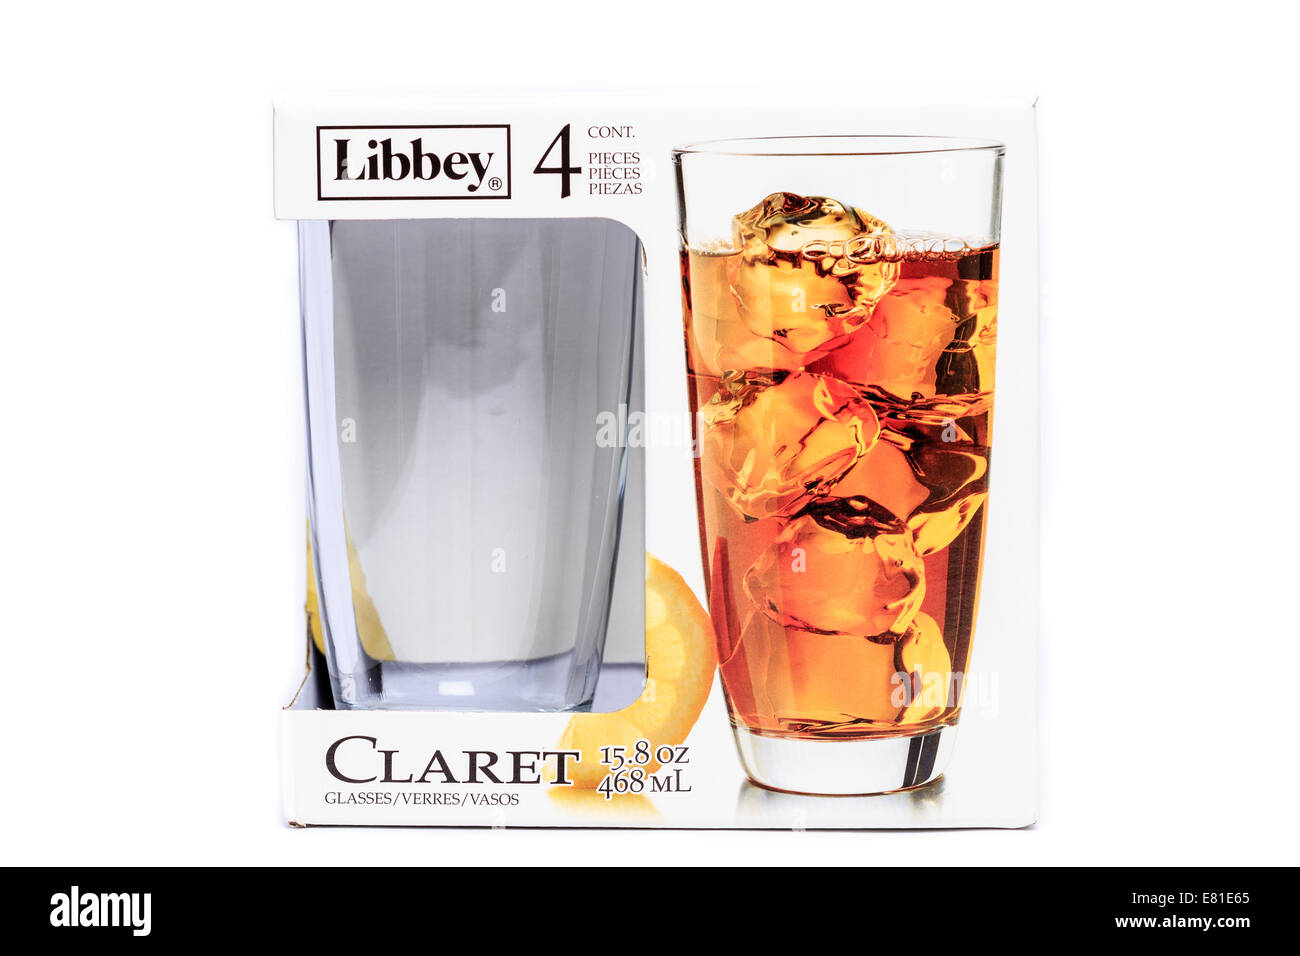 https://c8.alamy.com/comp/E81E65/a-4-count-box-of-libbey-drinking-glasses-E81E65.jpg